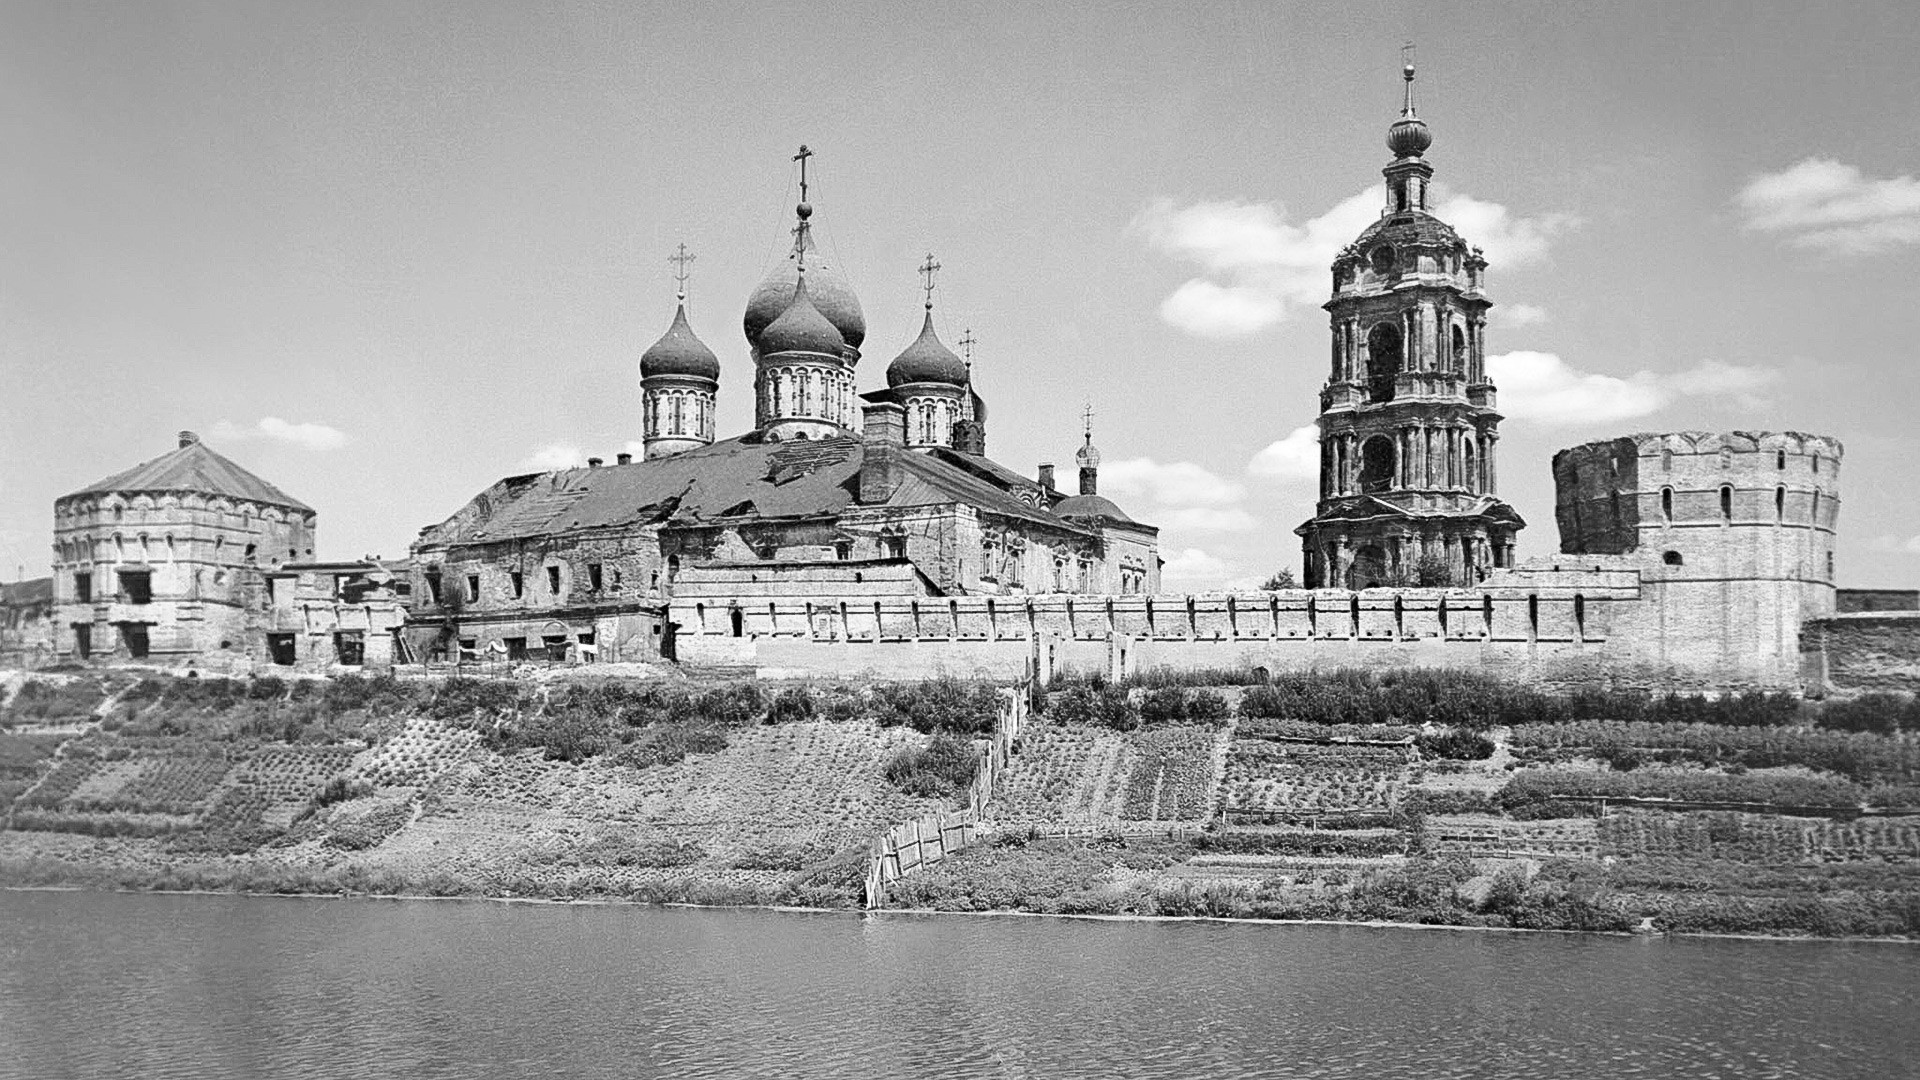 Novospaski manastir

